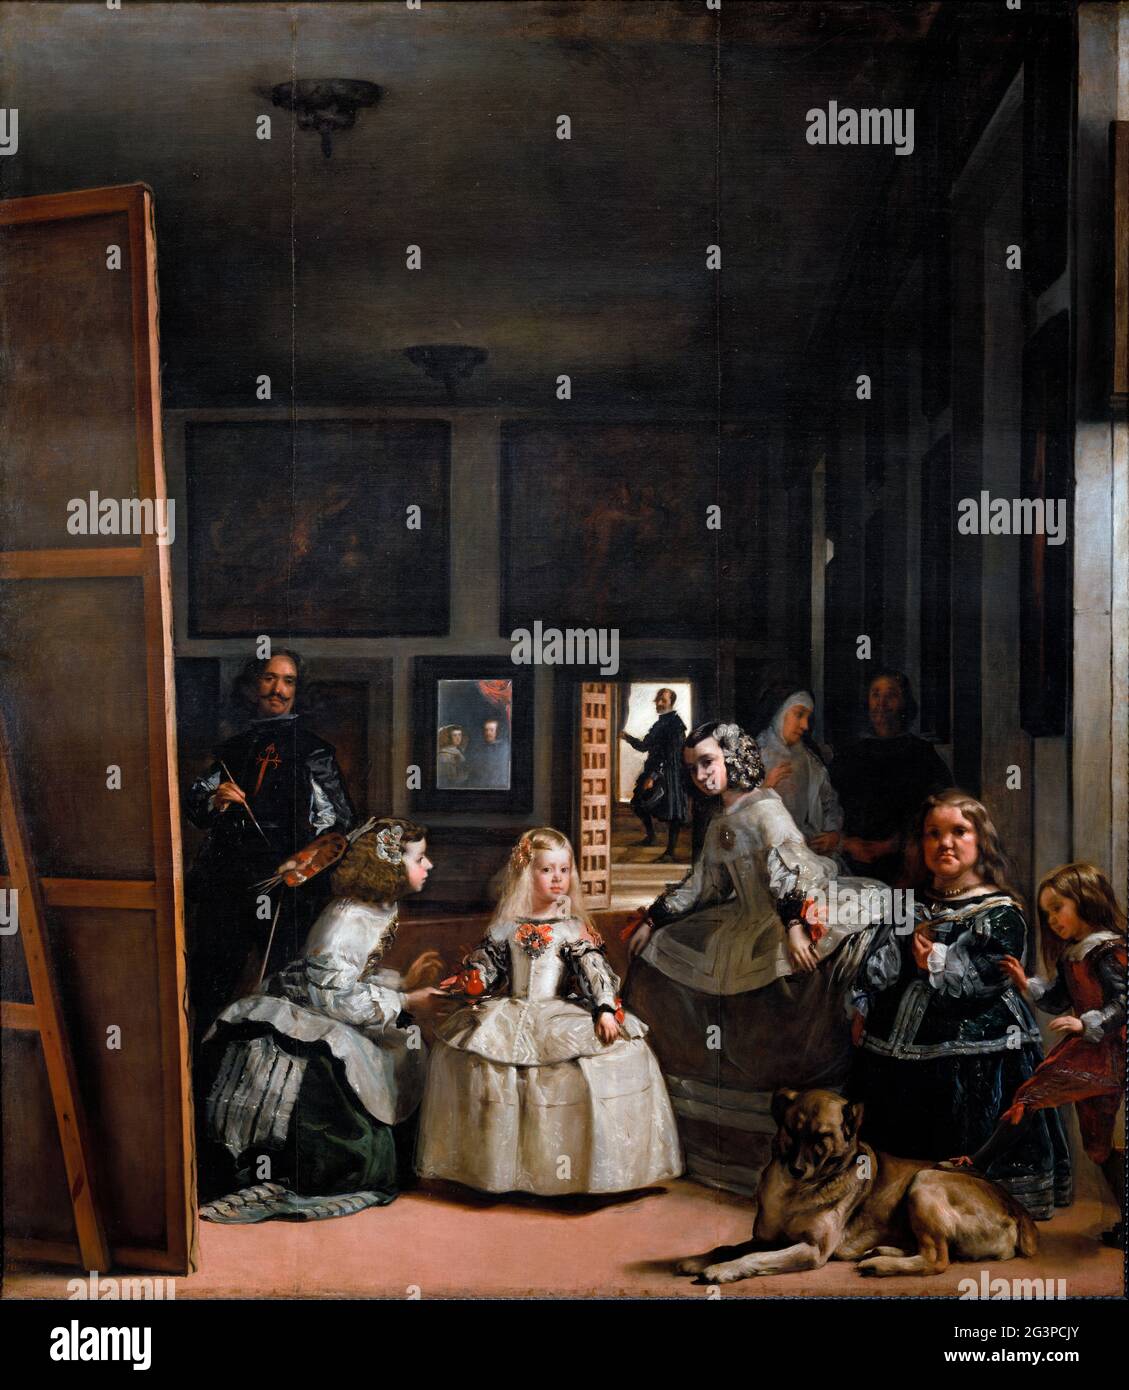 The Mystery of 'Las Meninas' by Diego Velázquez